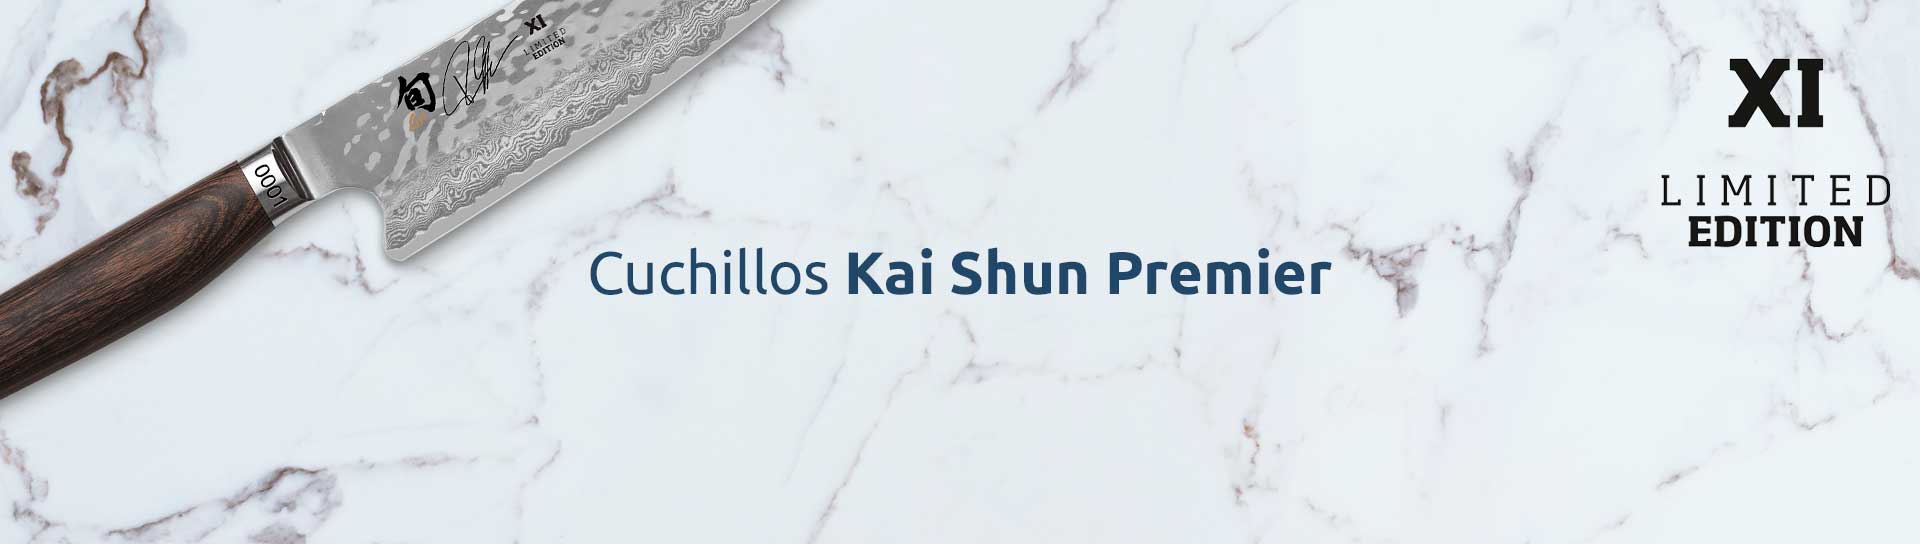 Cuchillos Kai Shun Premier